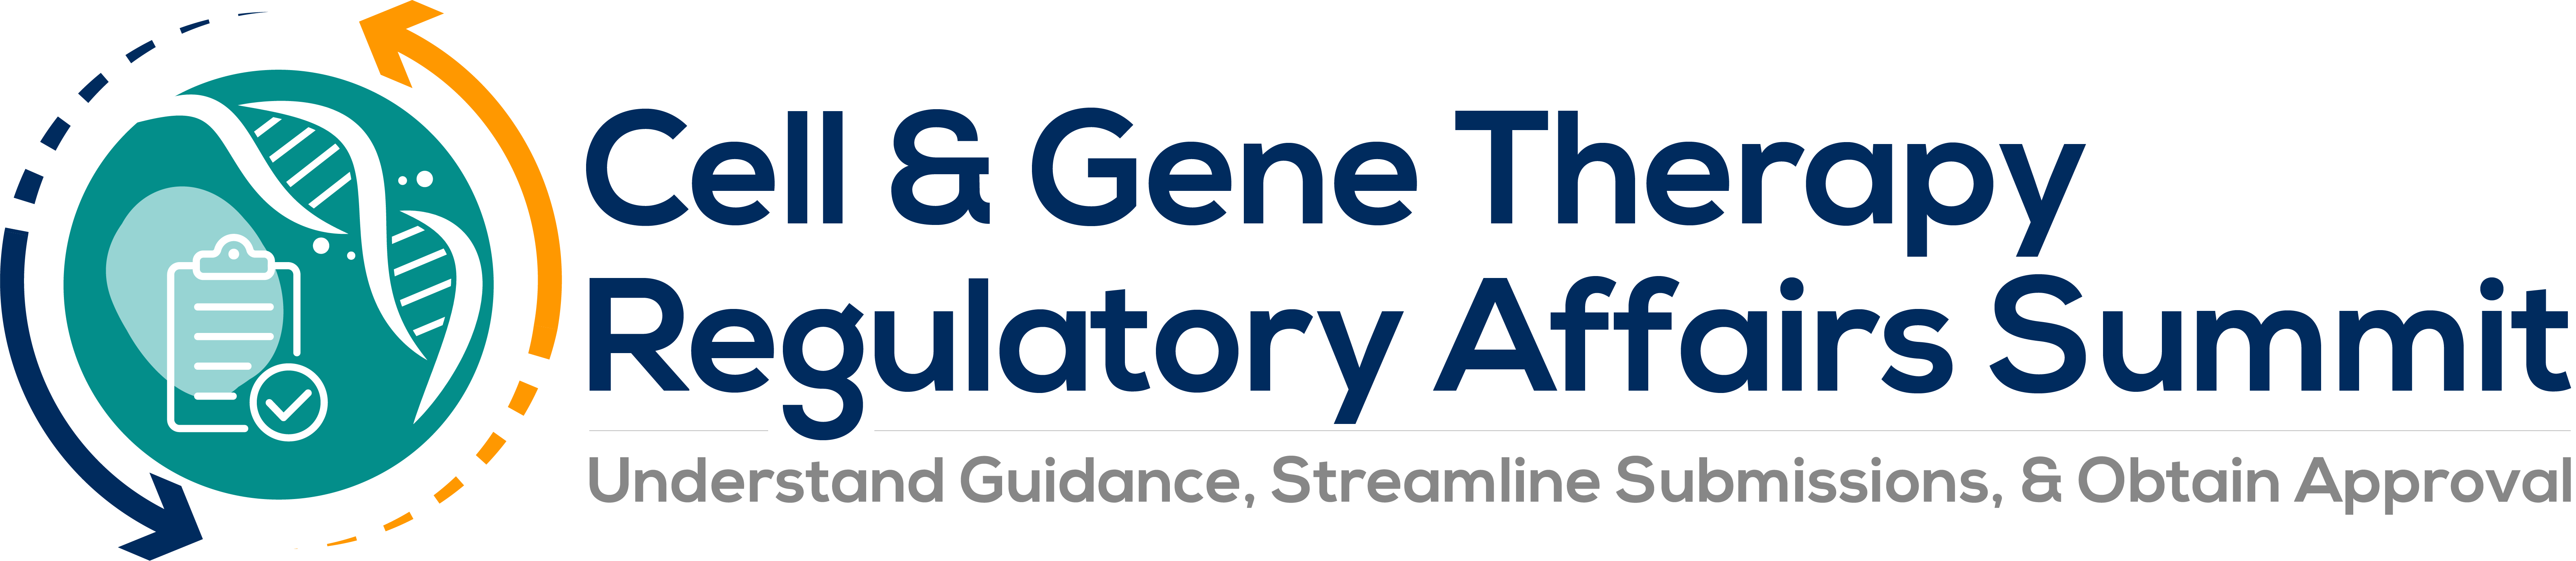 Cell & Gene Therapy Regulatory Affairs Summit - Logo